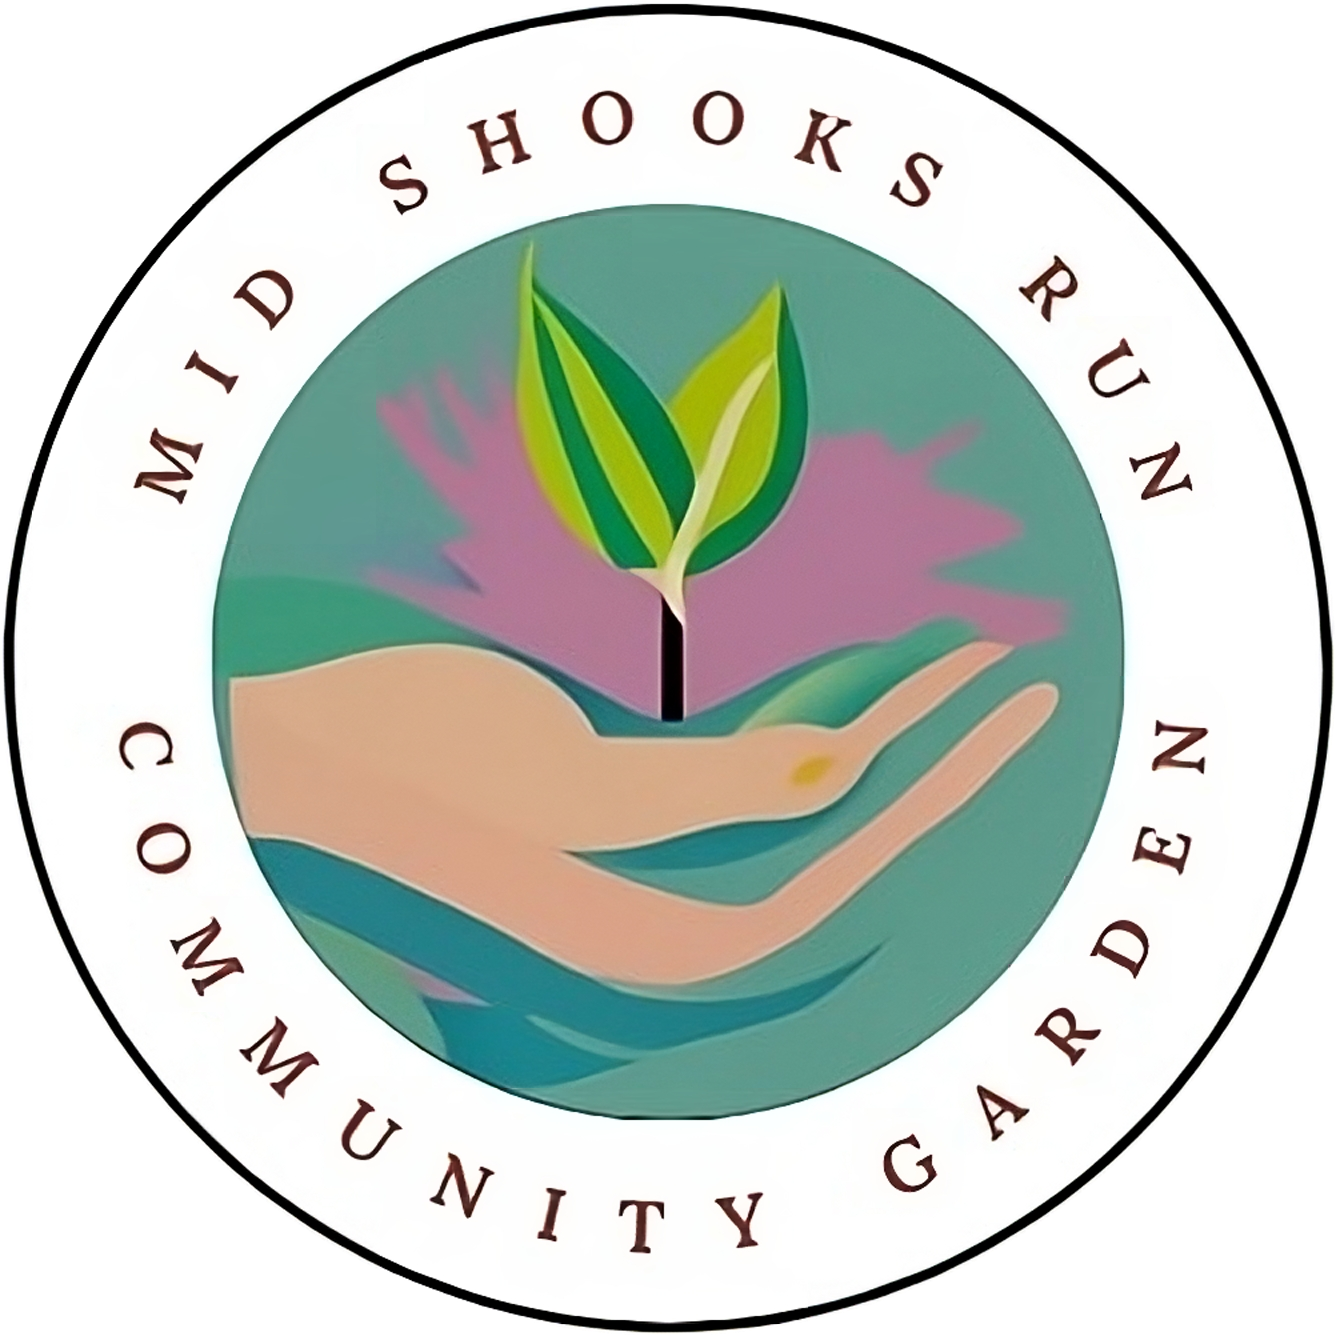 Mid Shooks Run Community Garden